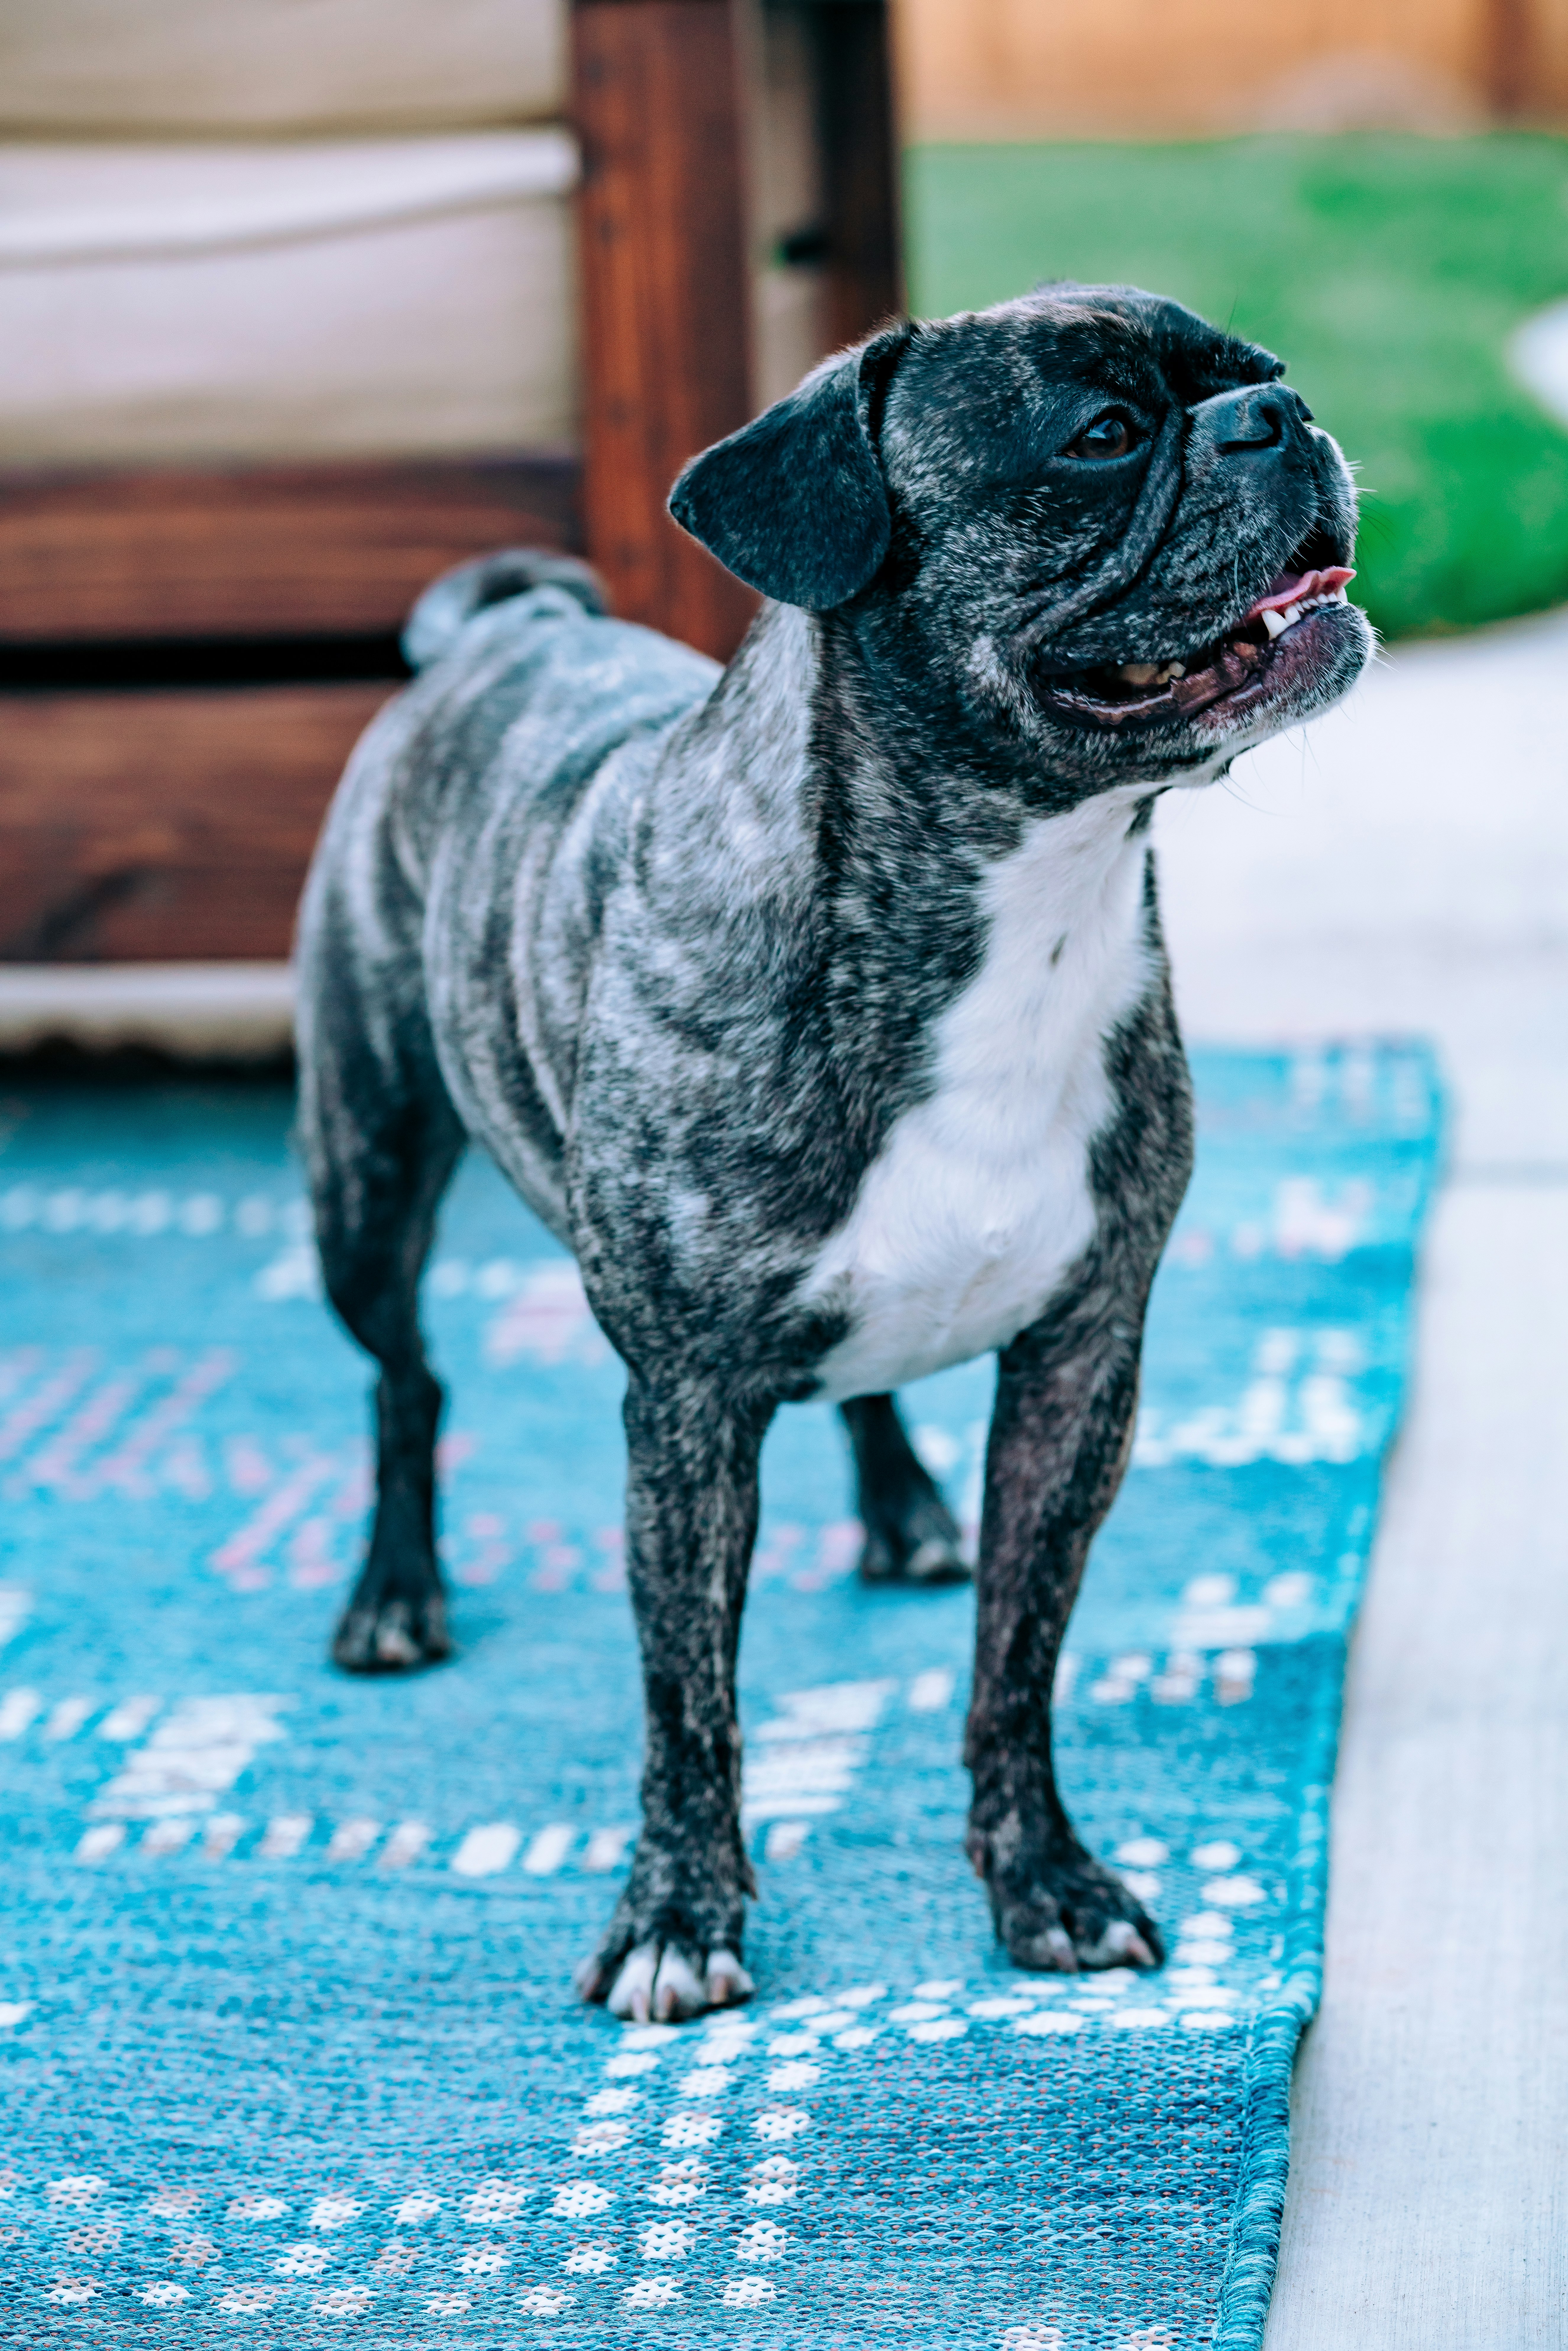 black and white short coated dog on blue and white textile